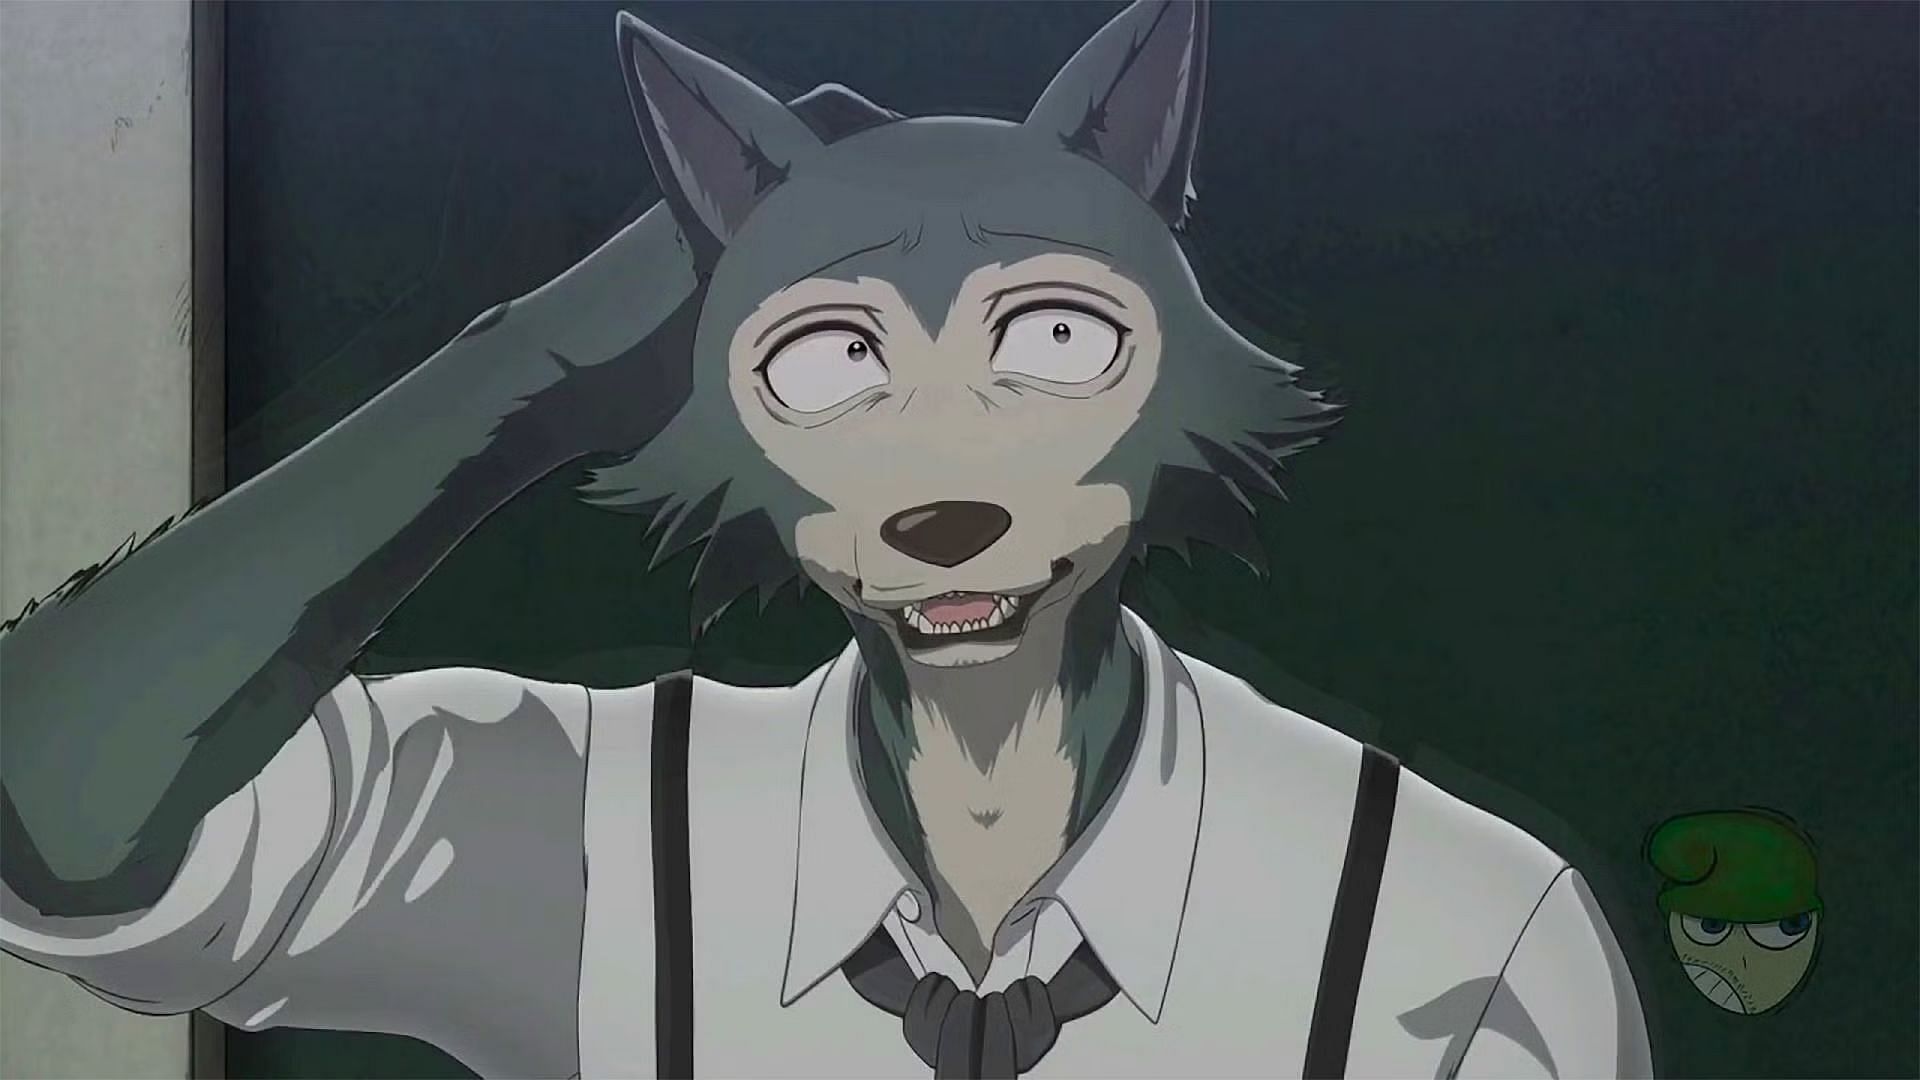 Furry anthropomorphic fox handsome anime kemono style anime